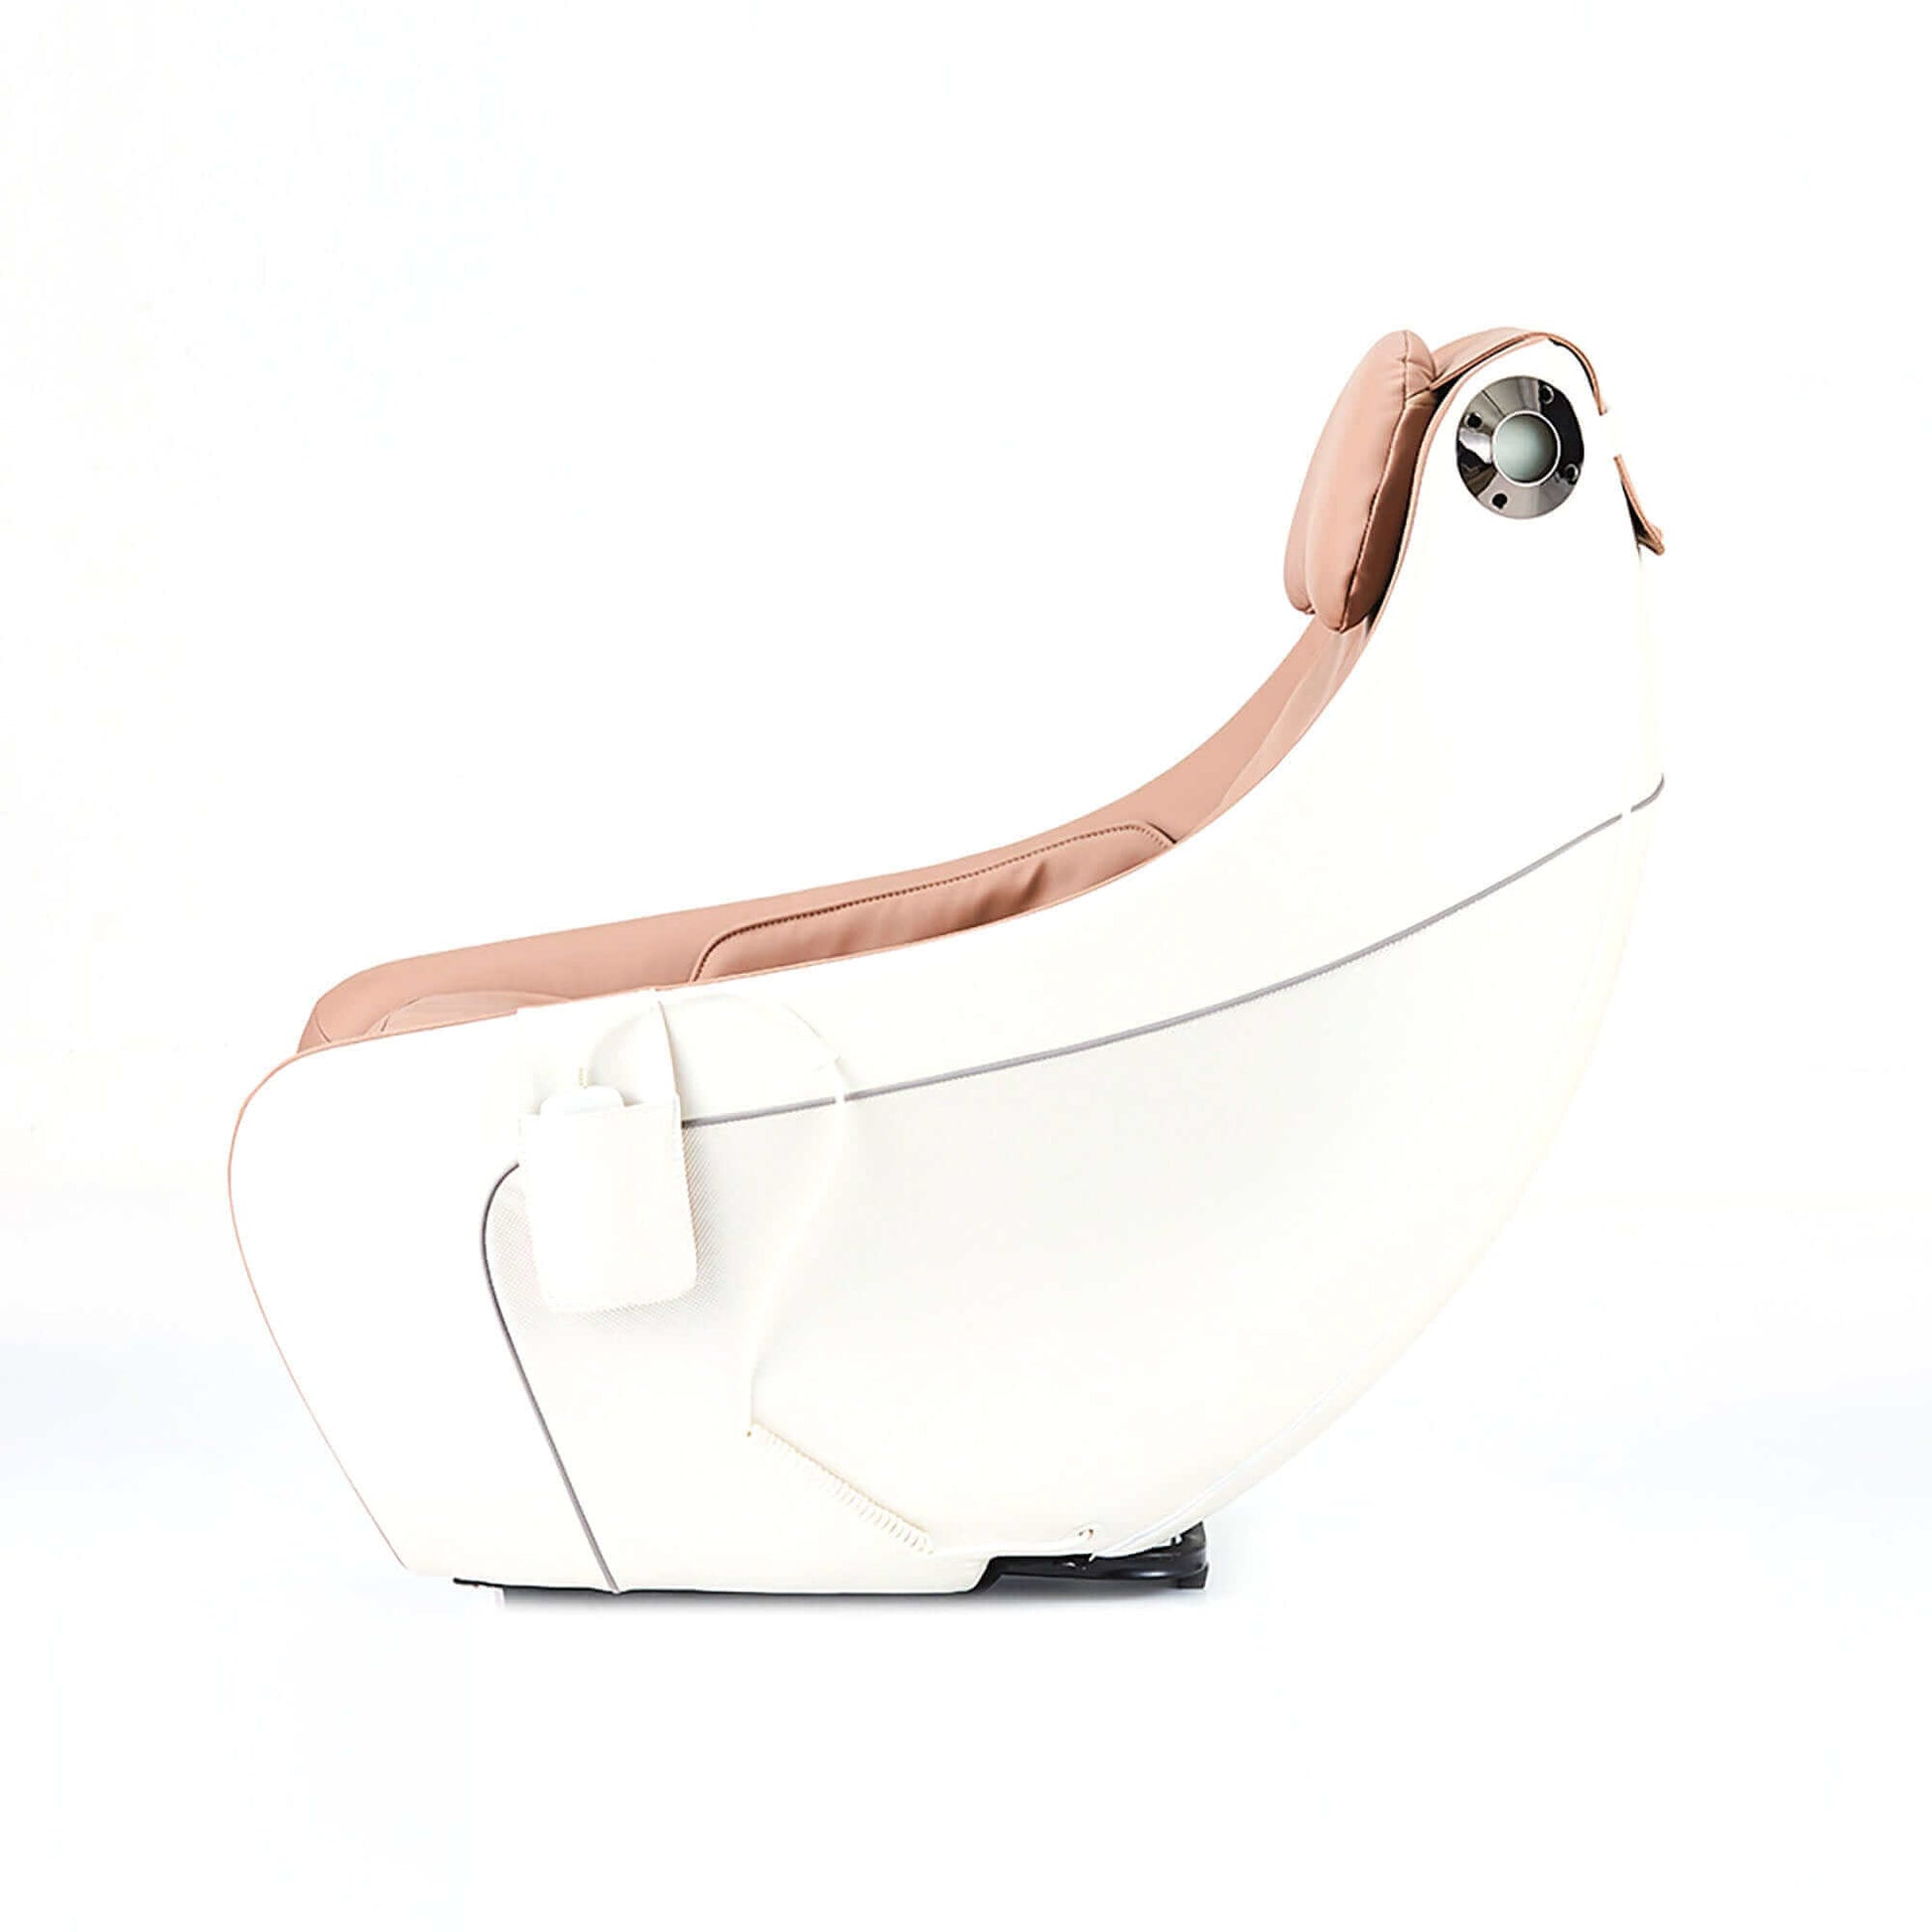 Synca Wellness CirC - Premium SL Track Heated Massage Chair - Electric Massaging Chairs